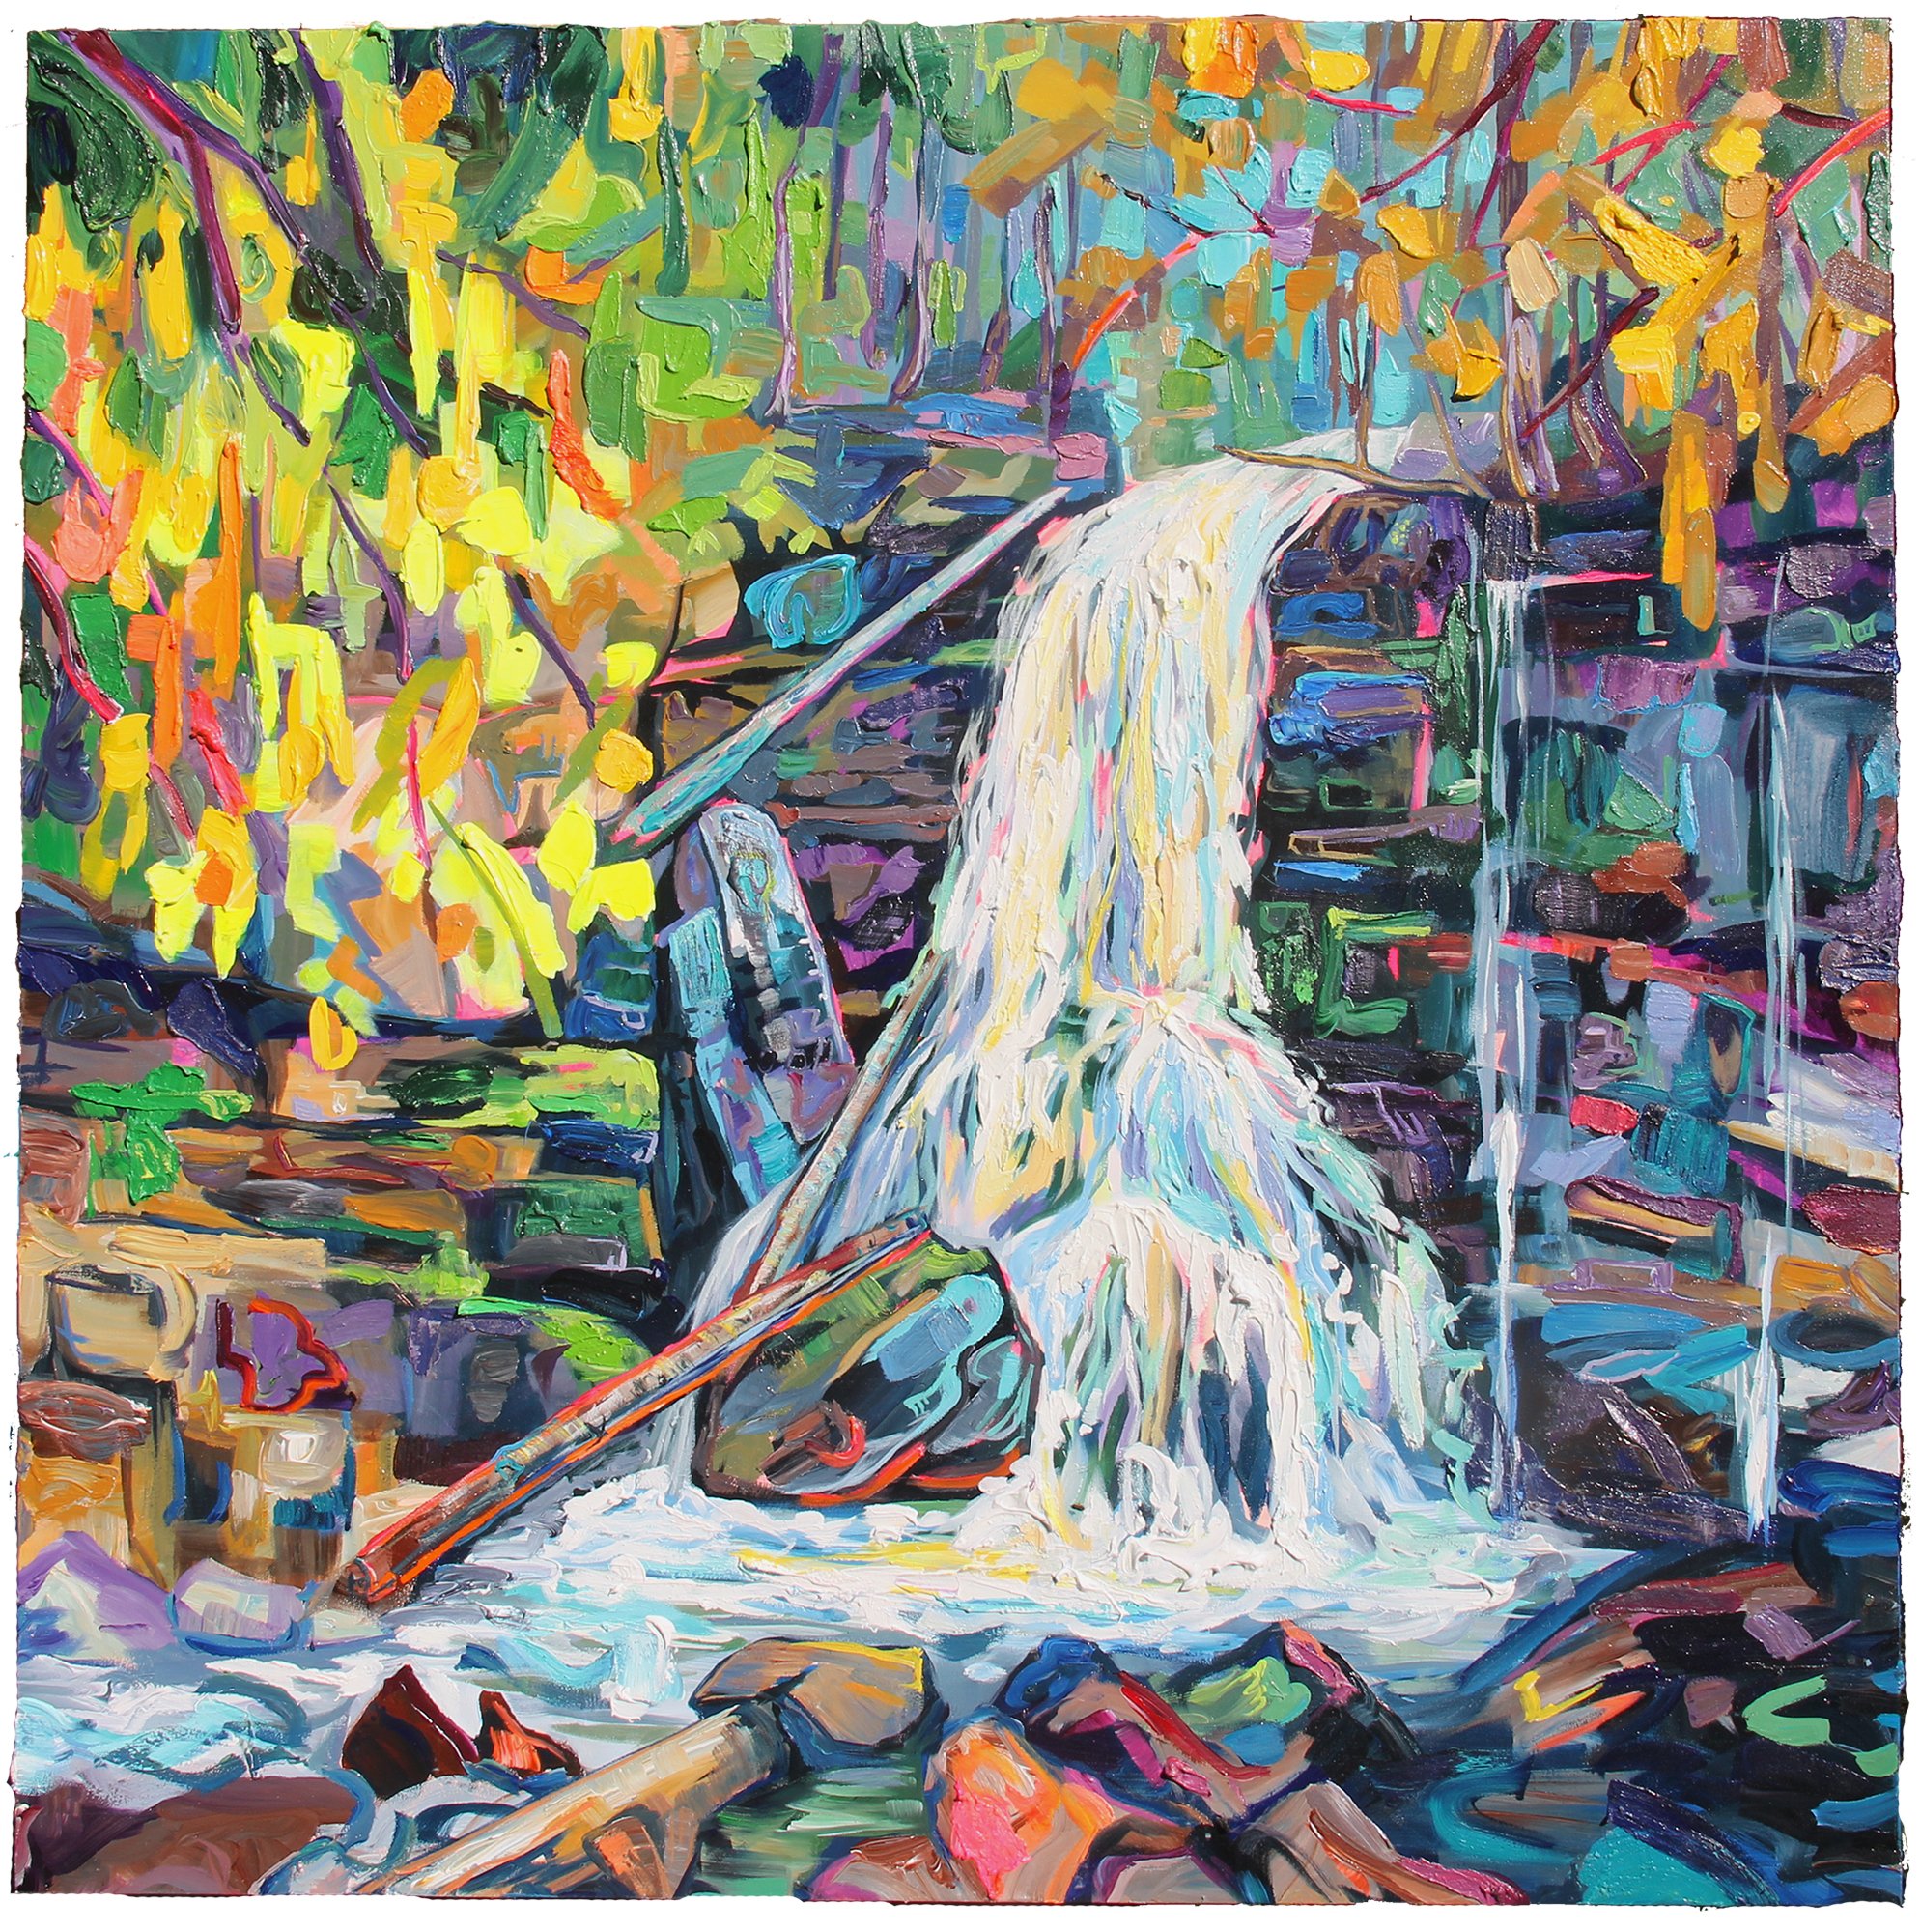 Chasing Woodland Waterfall, 48 x 48", acrylic on panel, 2021